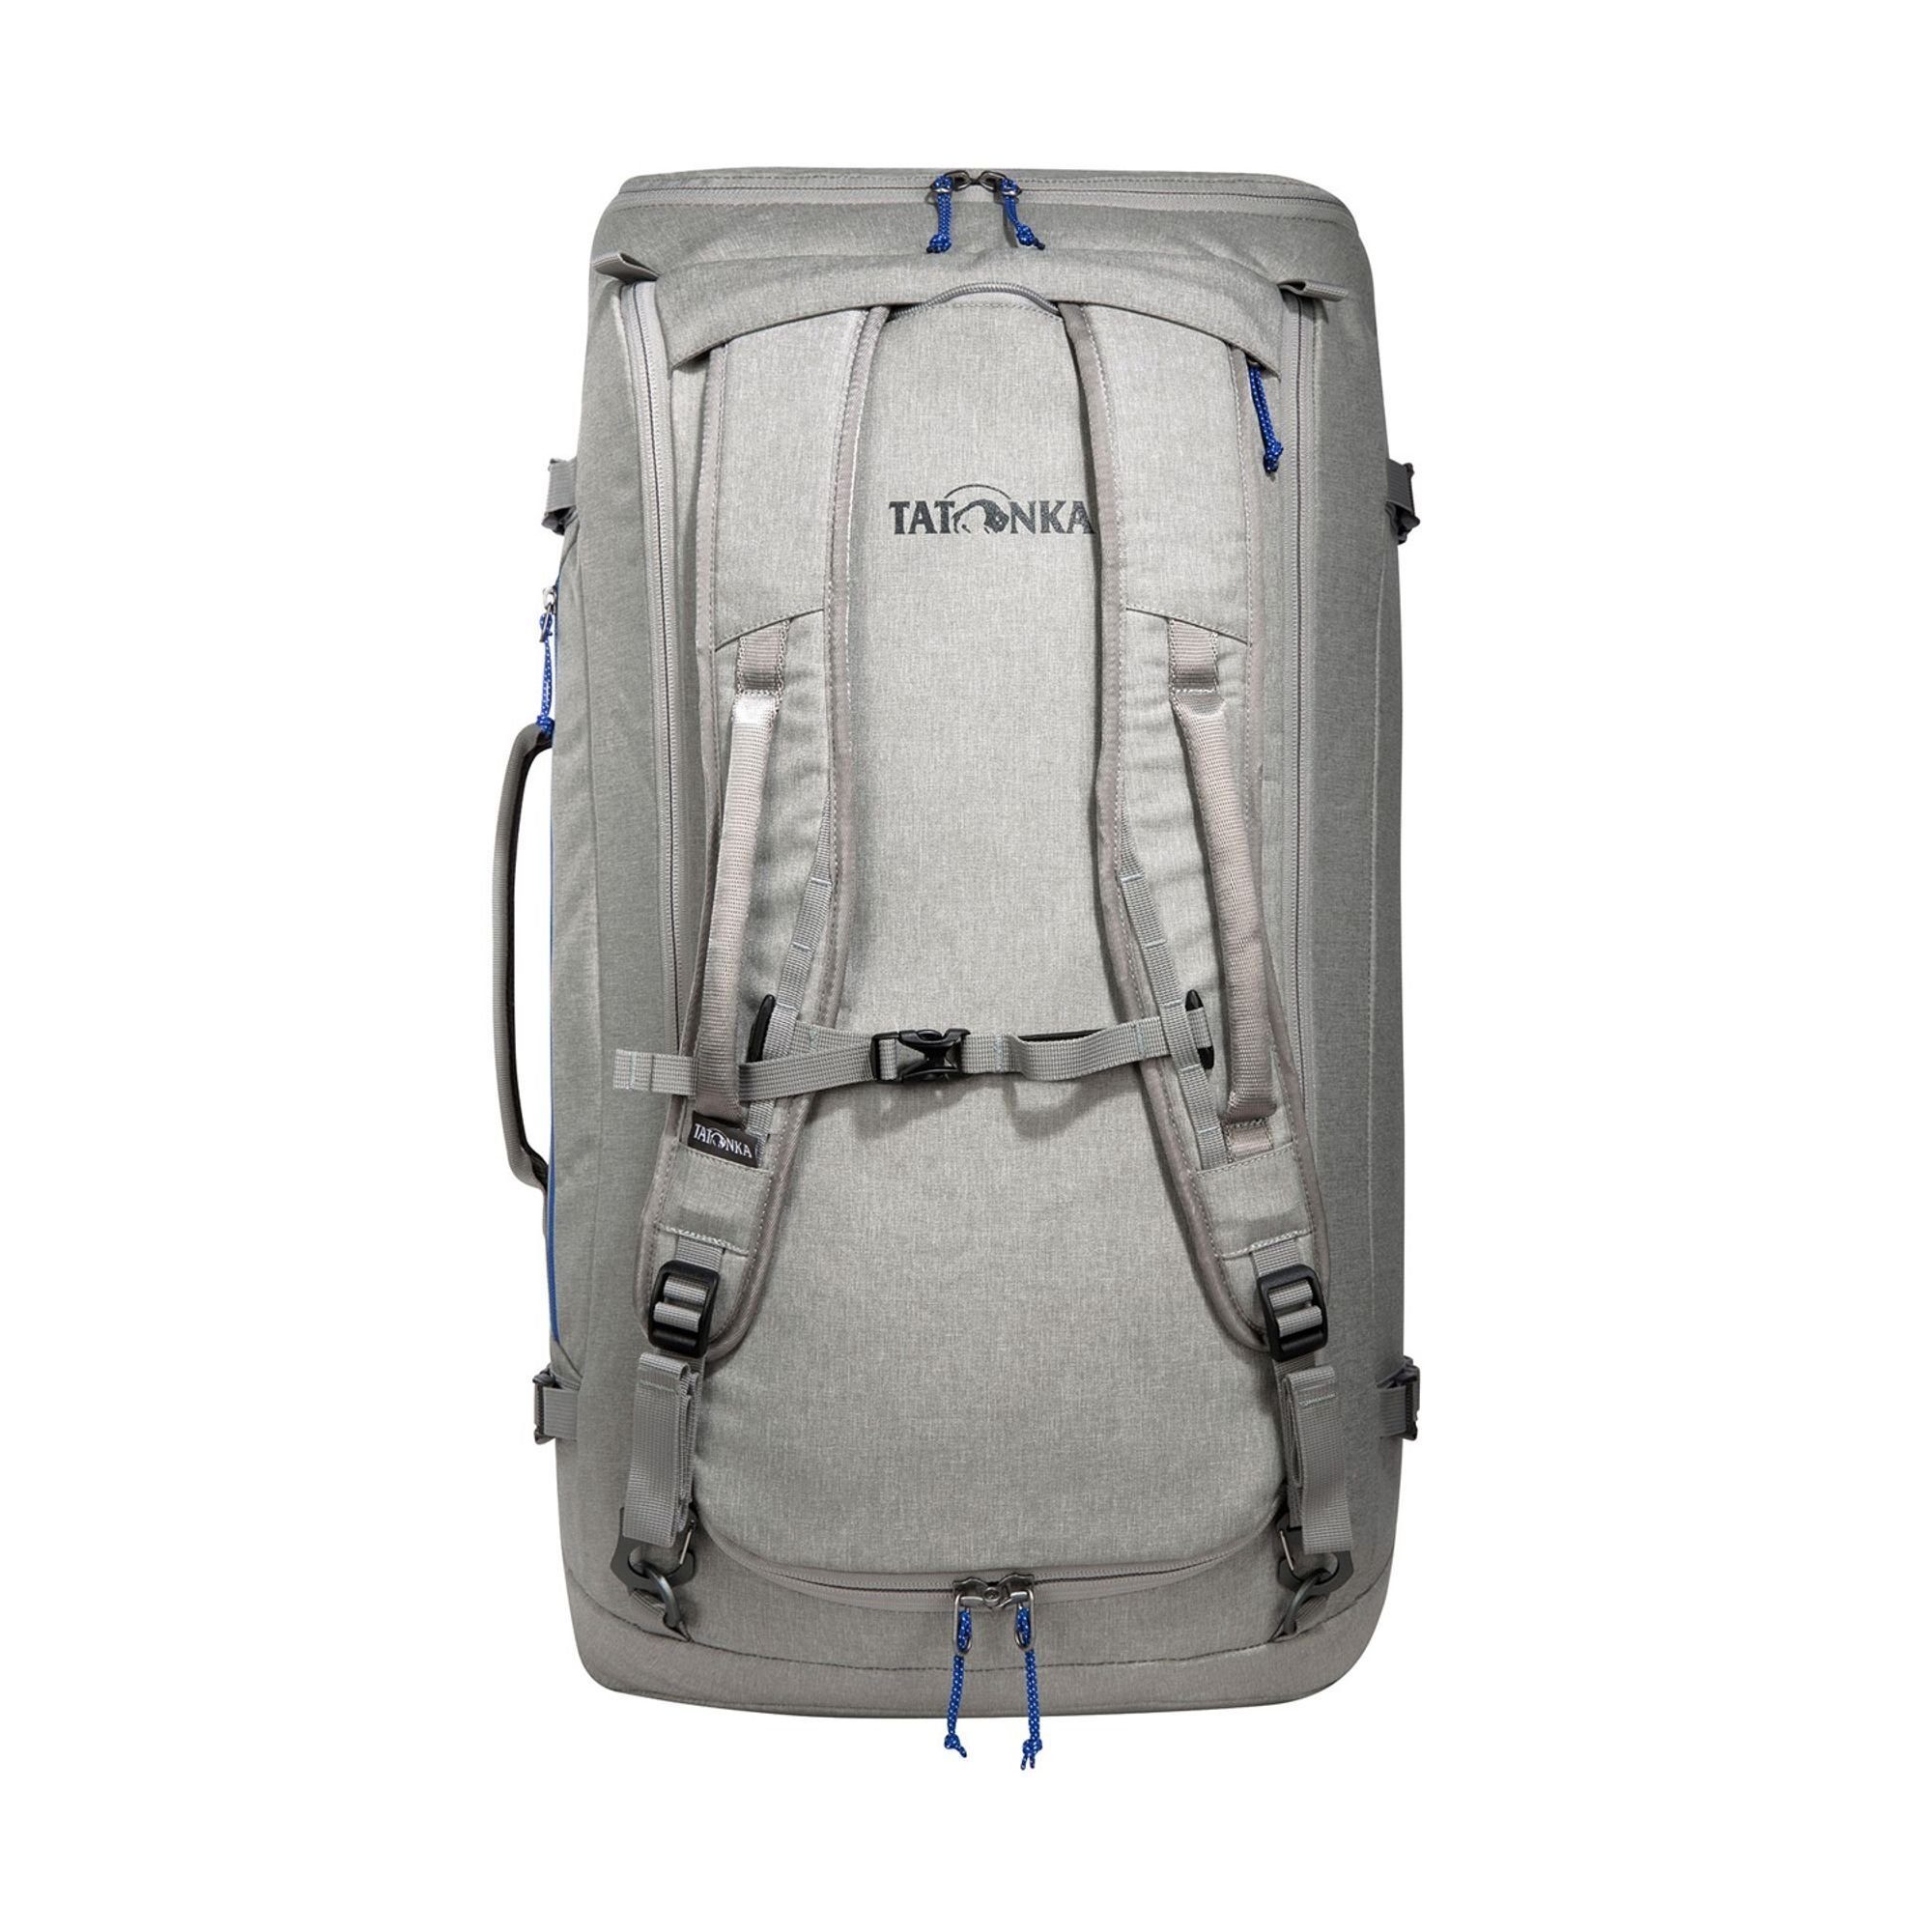 TATONKA® Reisetasche Duffle Bag 65, Nylon grey | Reisetaschen